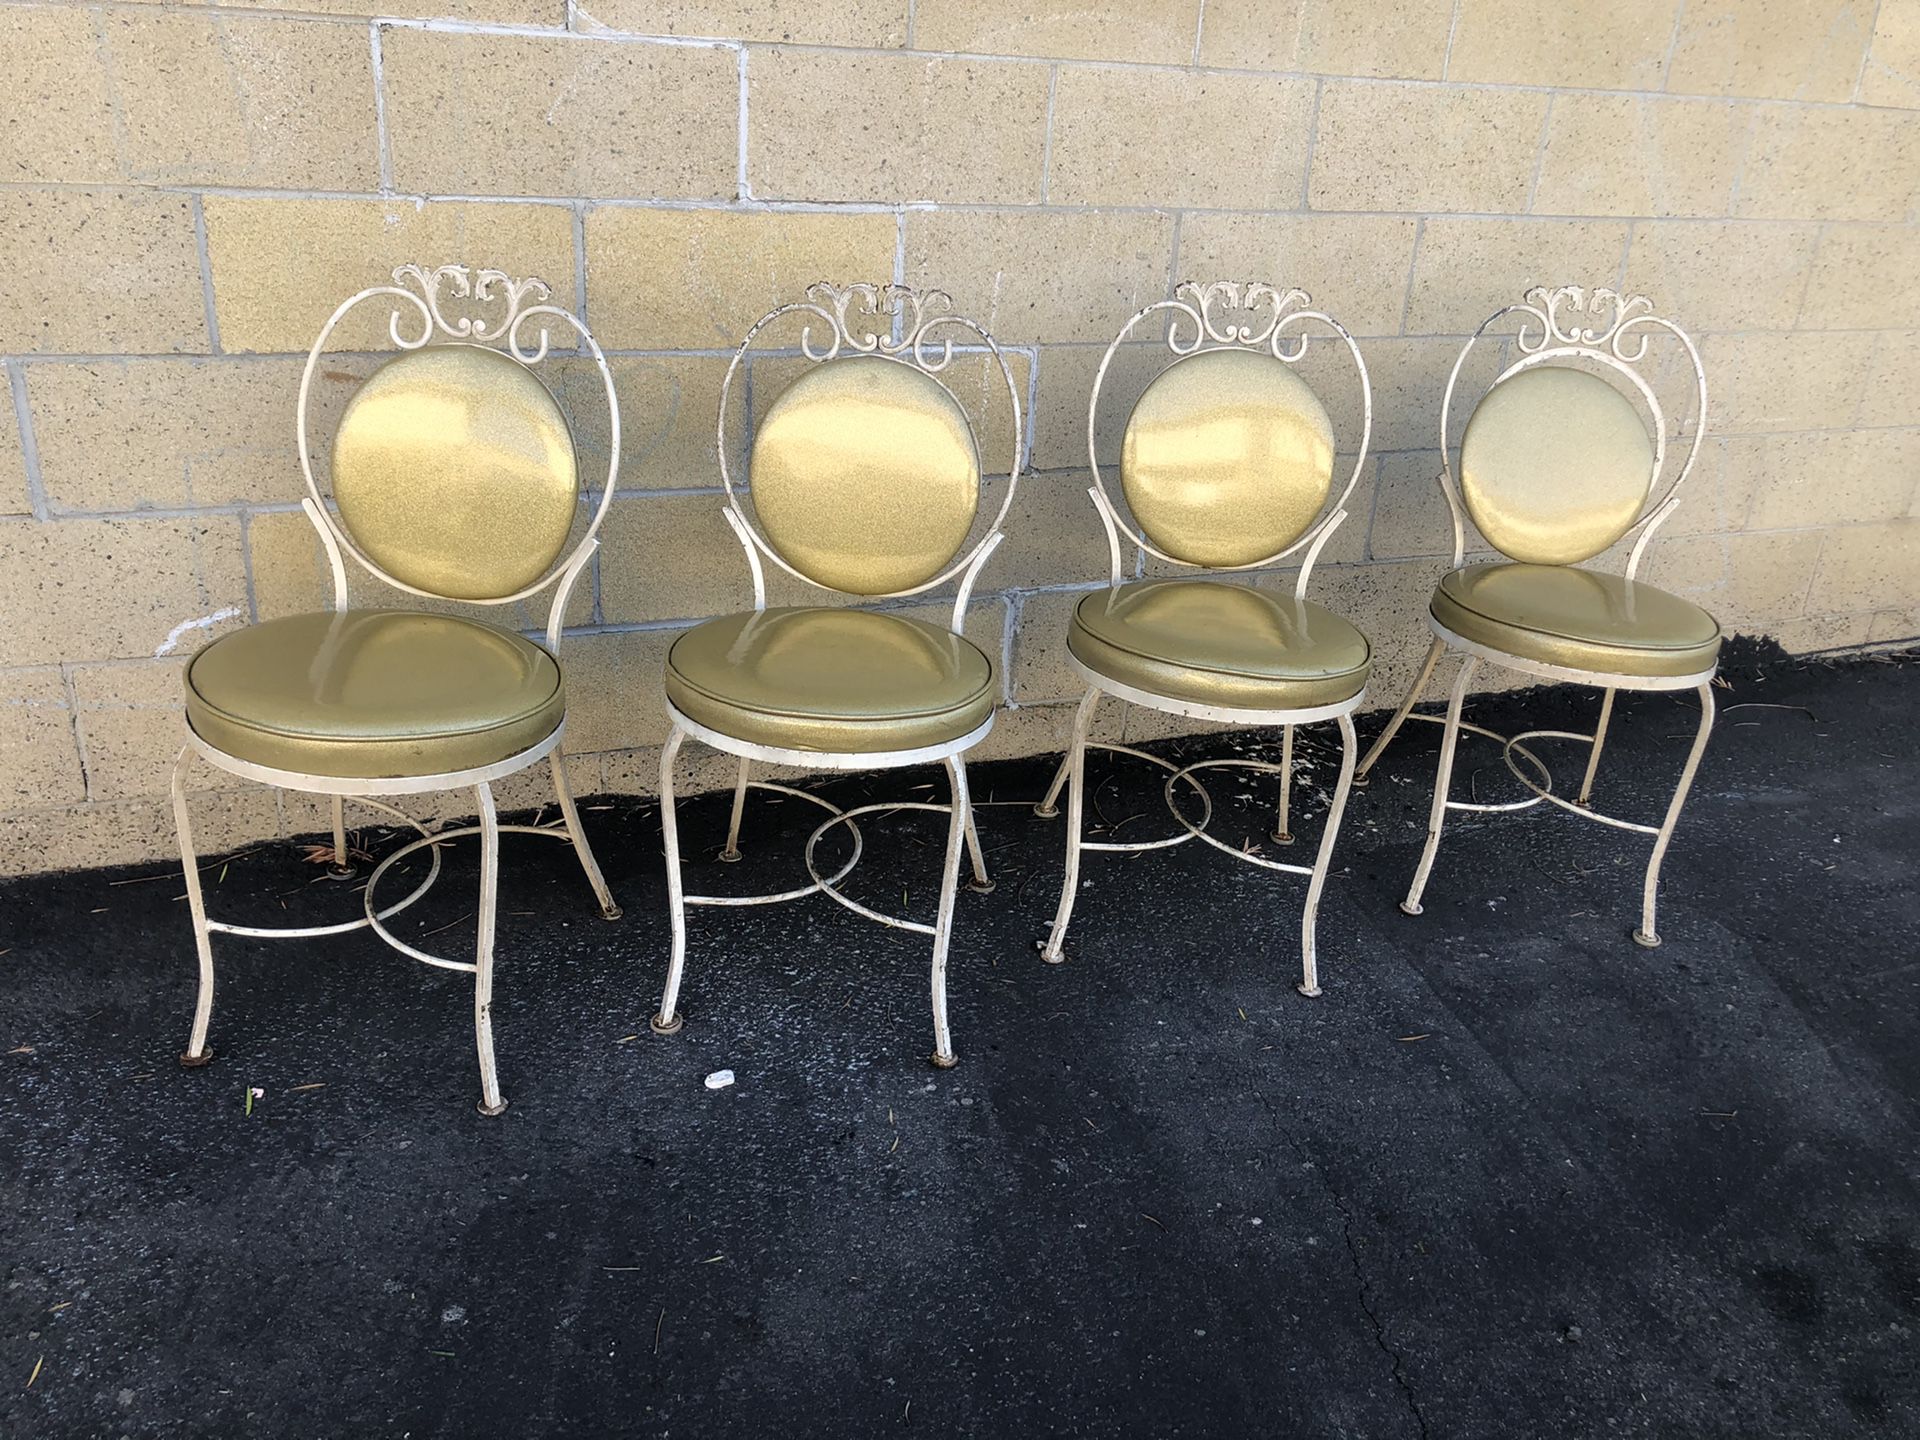 Vintage Glamour Kitchen/Patio wrought iron chairs (4) gold glitter vinyl